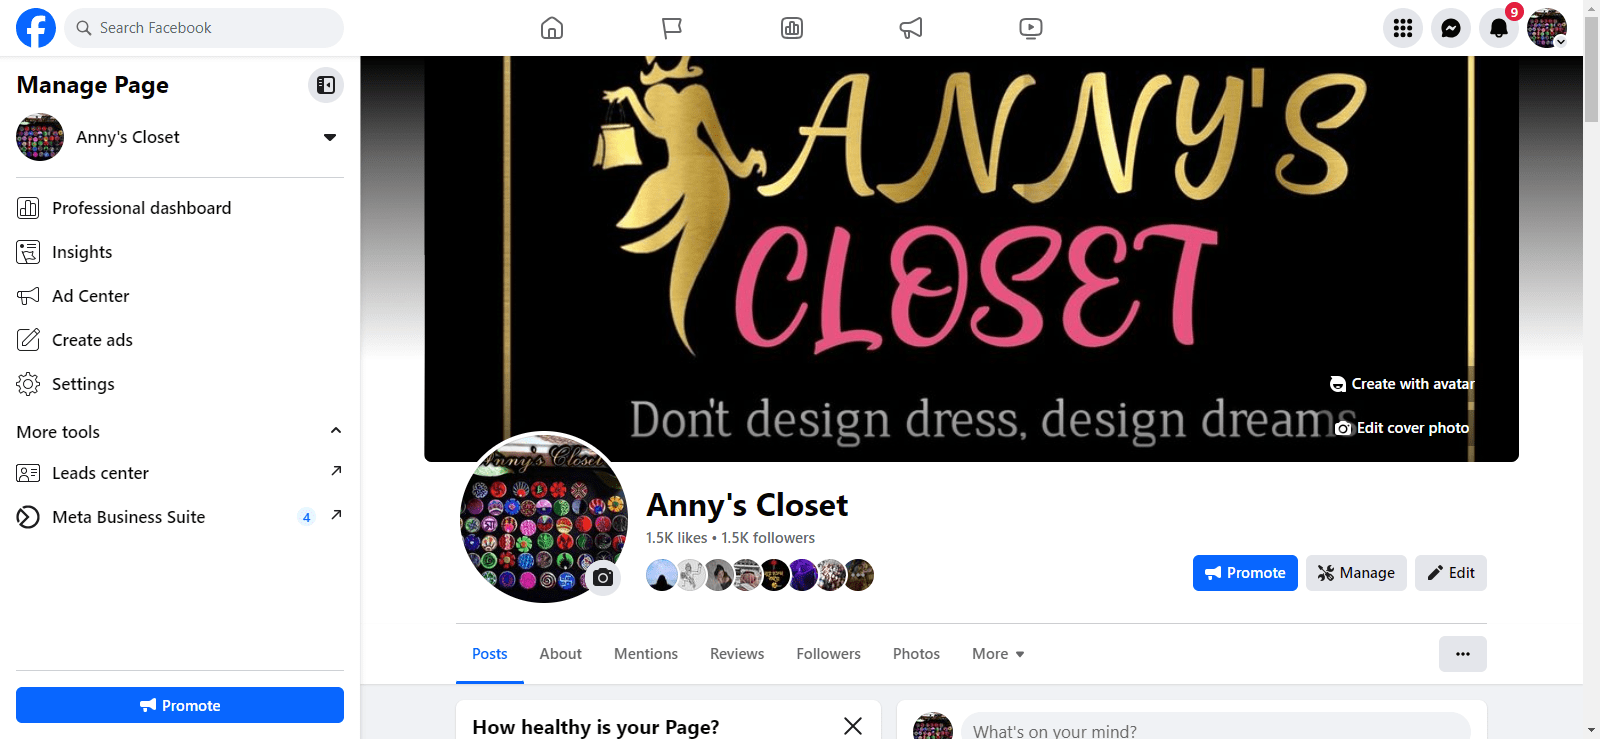 Anny’s Closet